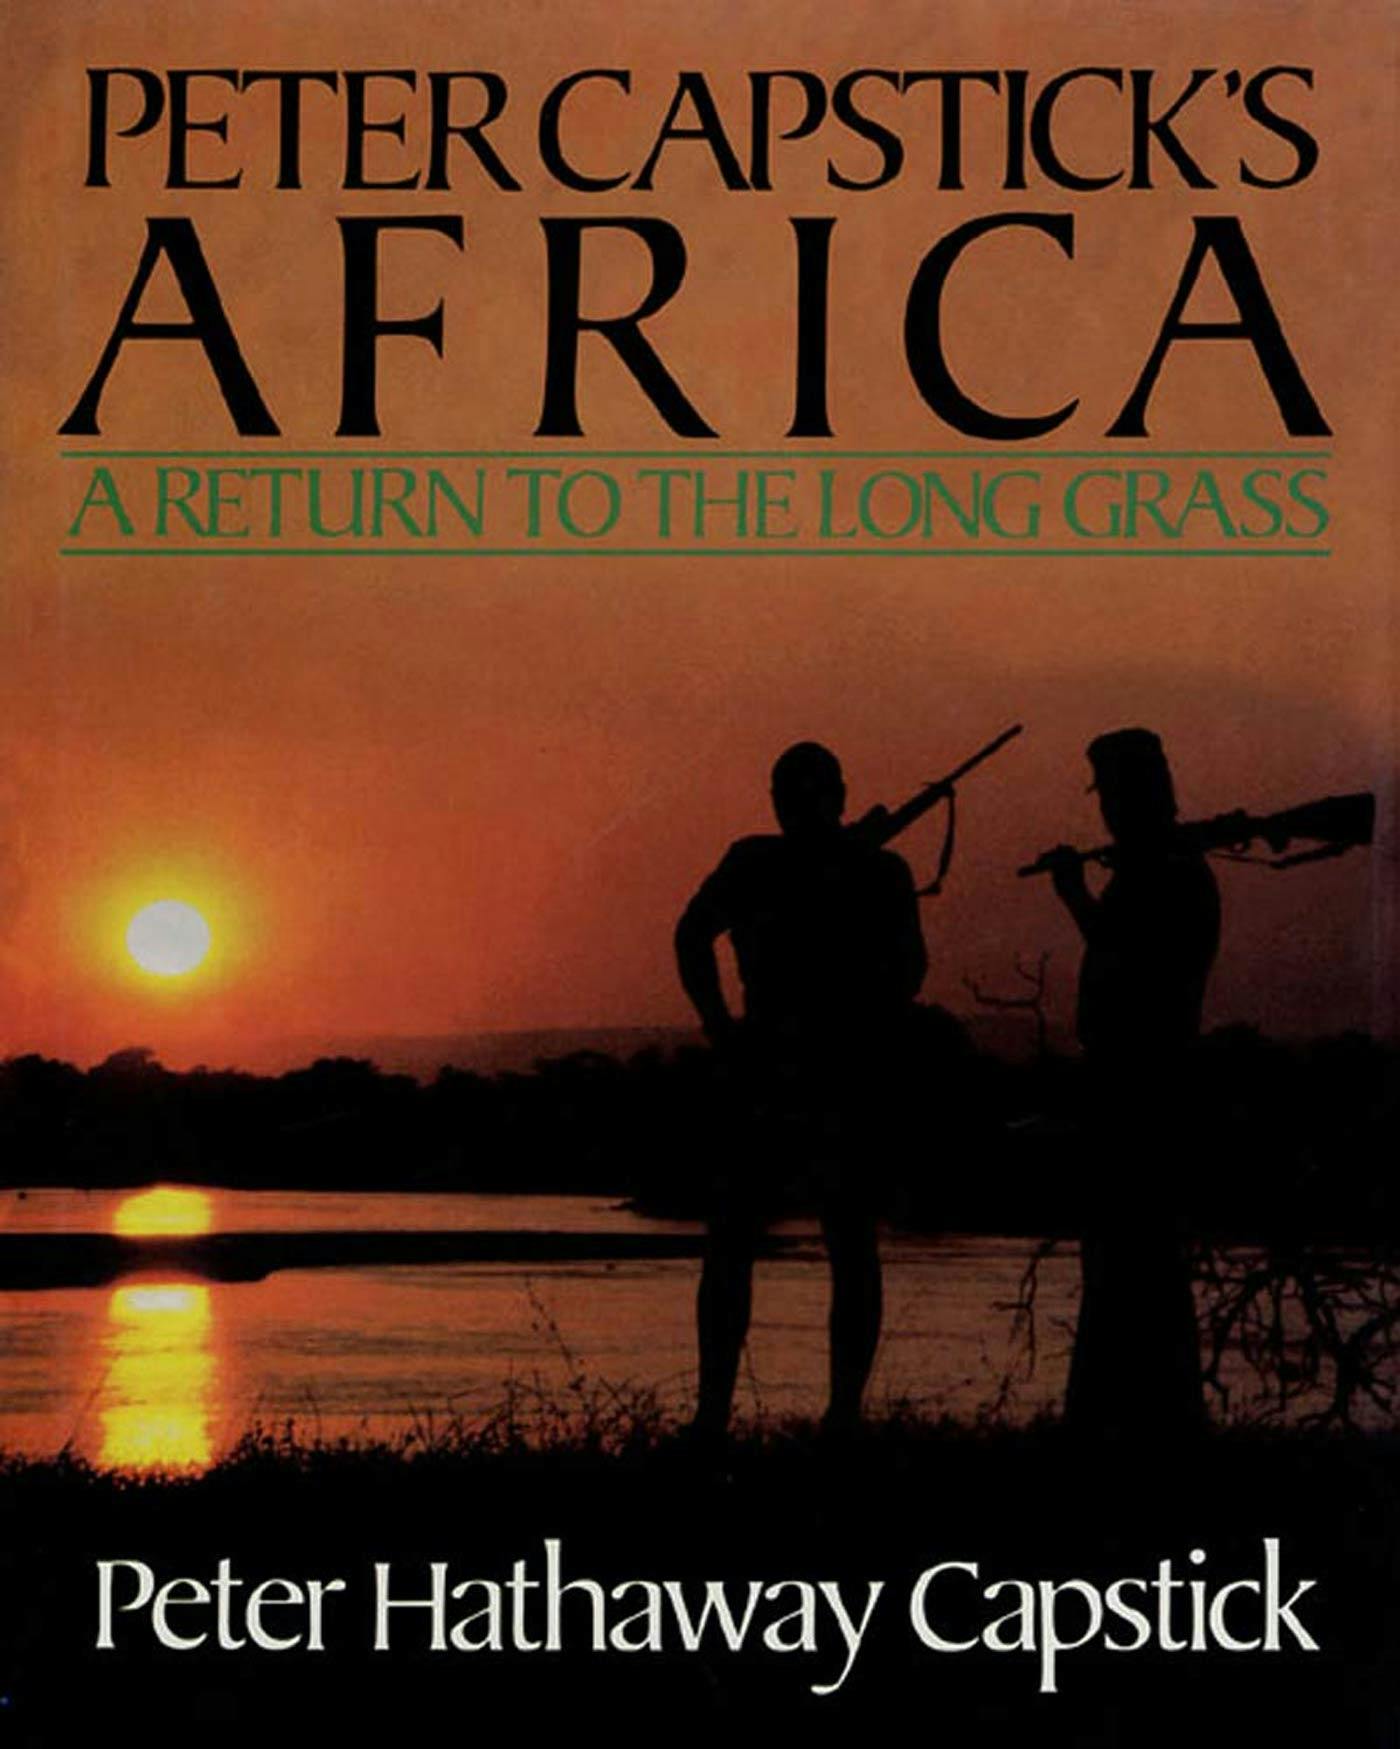 Peter Capsticks Africa